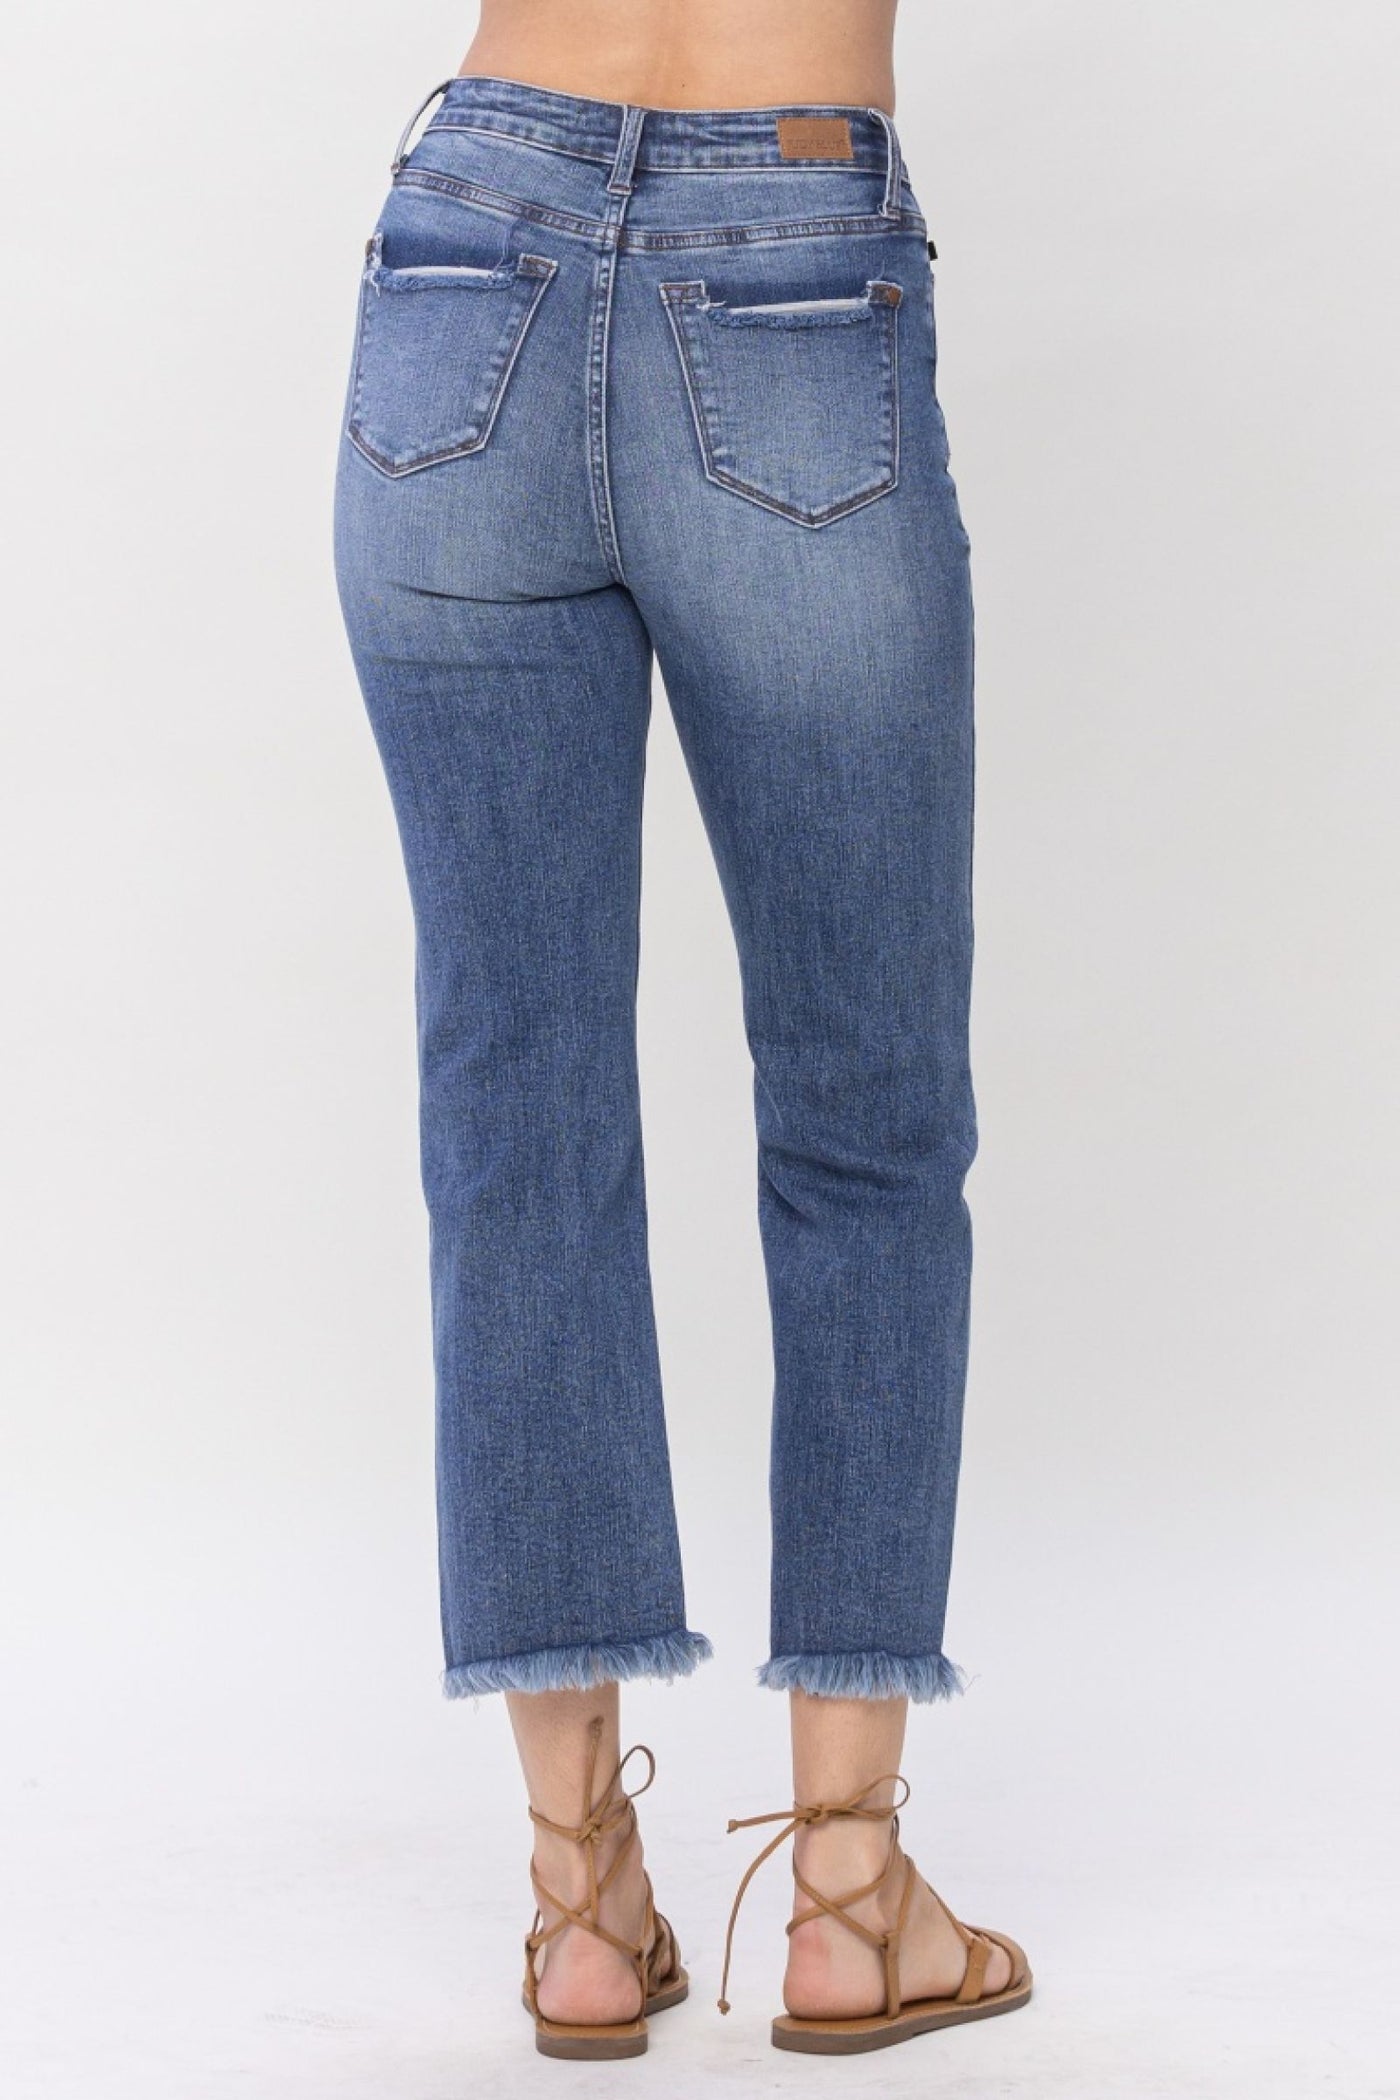 Judy Blue Jeans 88550